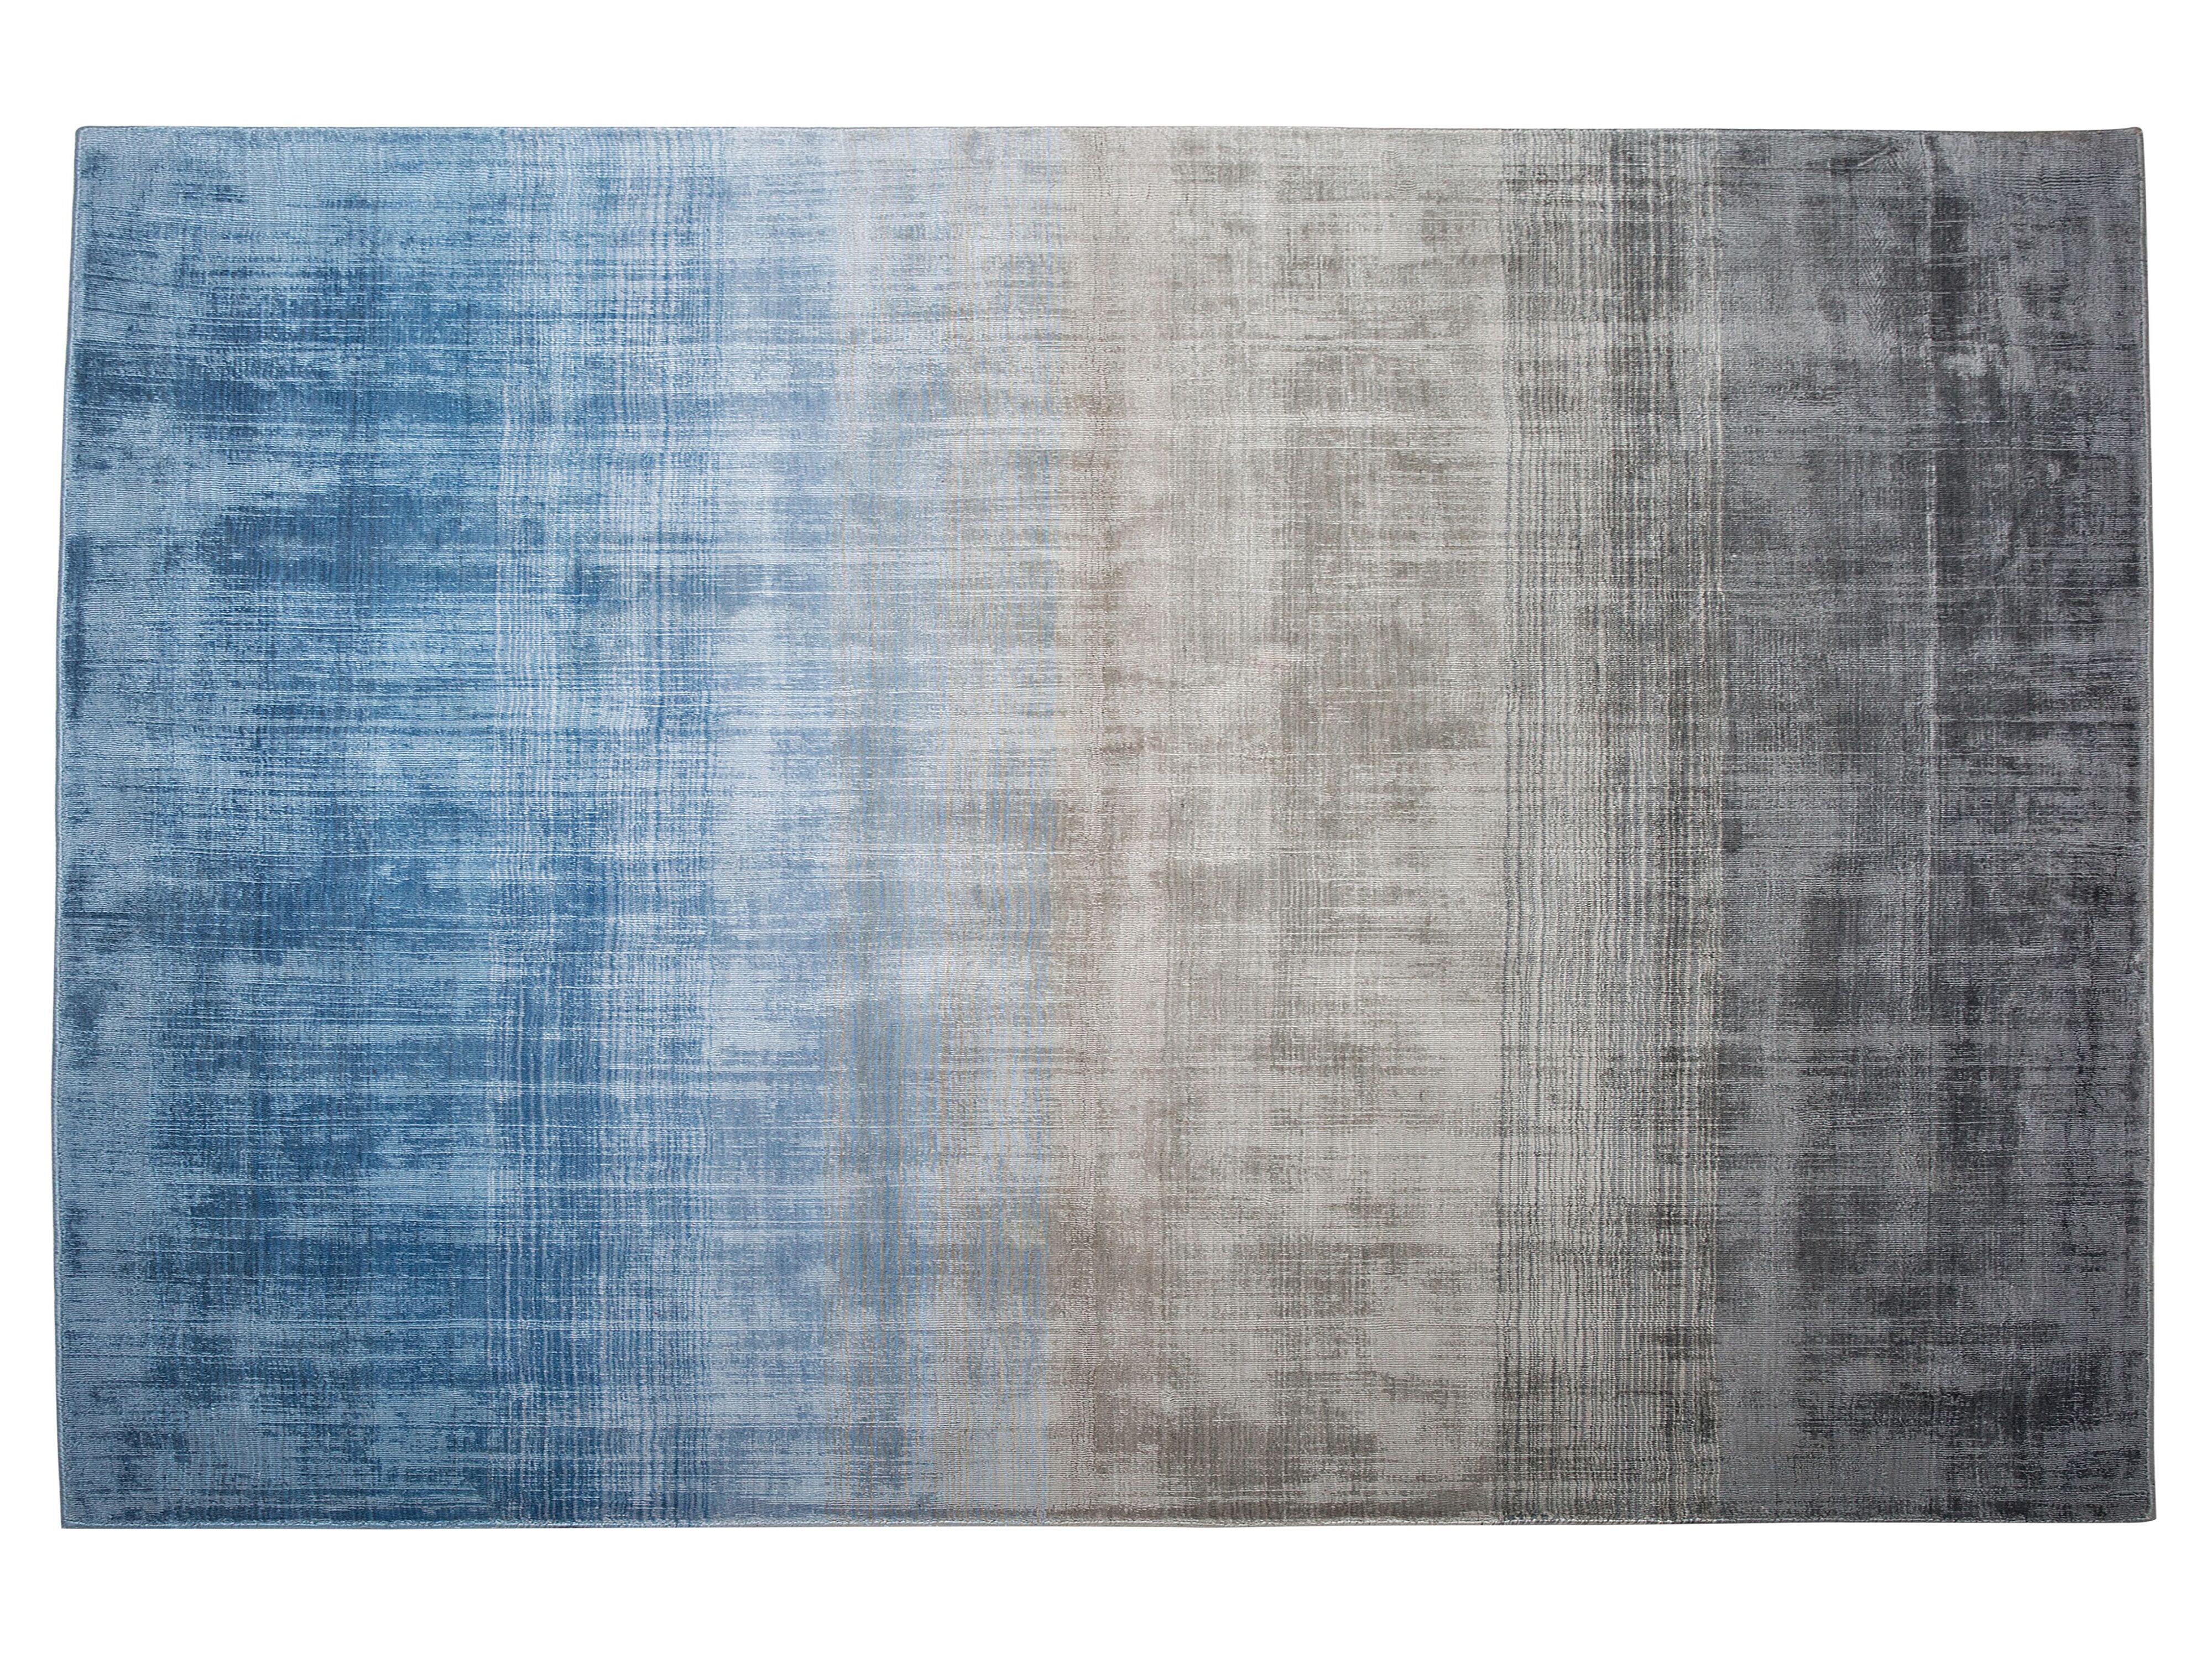 draaipunt Poging Dader Vloerkleed grijs/blauw 140 x 200 cm ERCIS | ✓ Gratis Levering